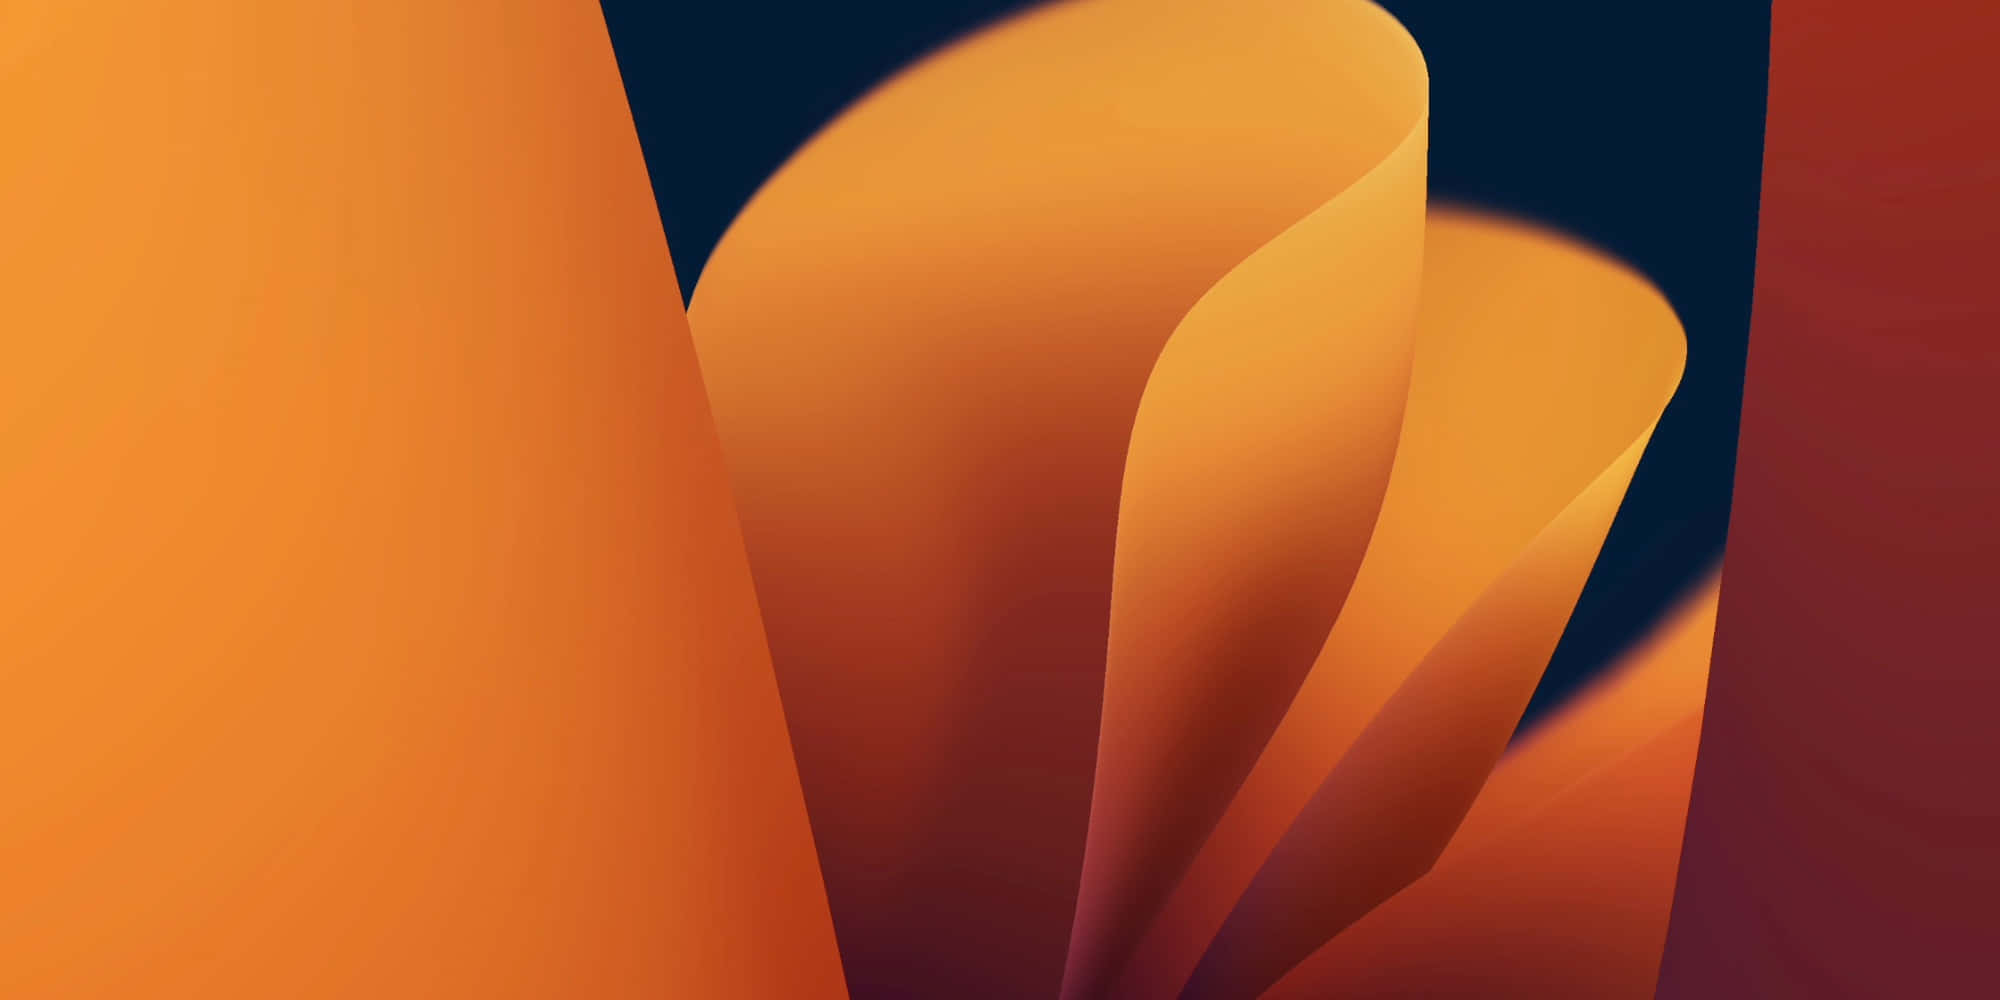 Bildschirmschonerbild Mit Orangefarbenem Blütenblatt